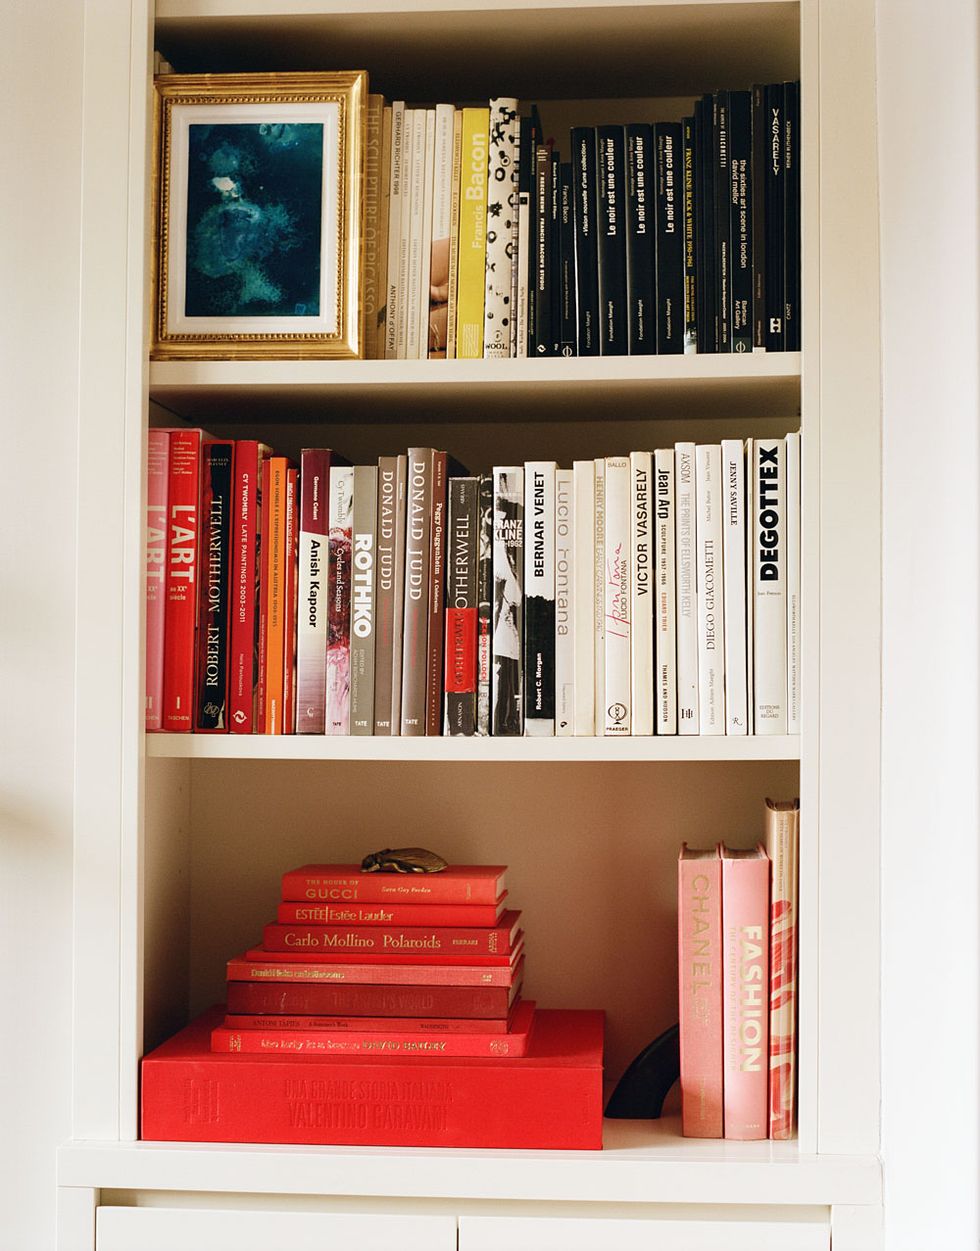 Publication, Shelving, Shelf, Carmine, Book, Collection, Parallel, Bookcase, Coquelicot, Book cover, 